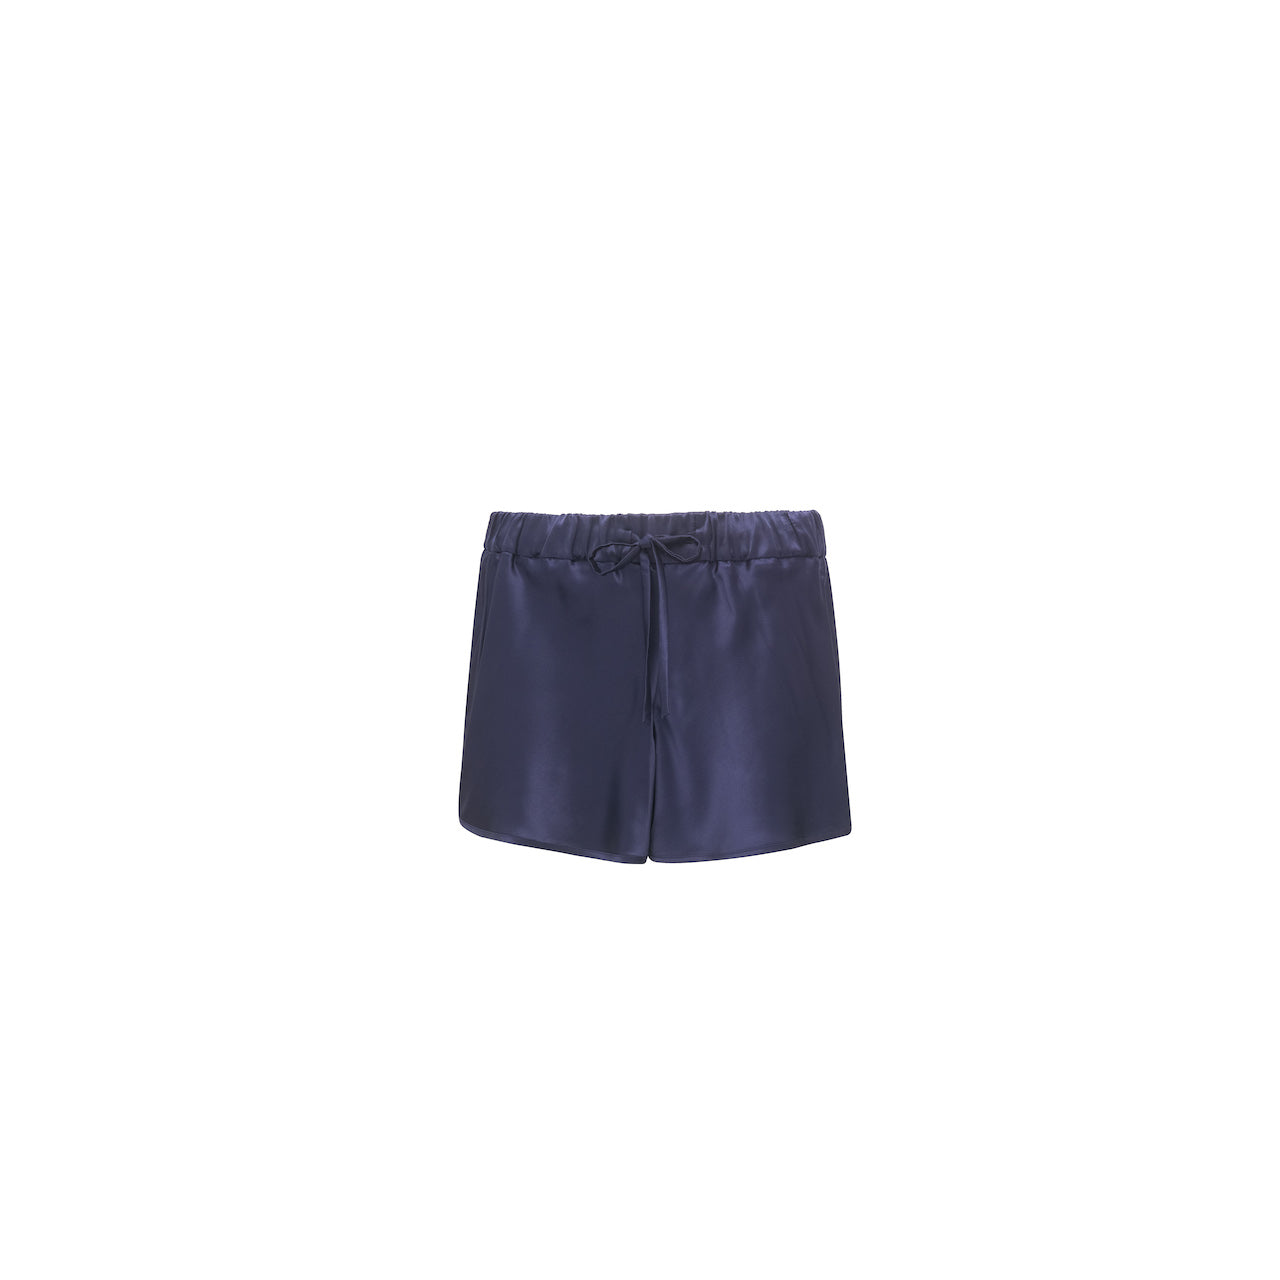 Silk sleep shorts Medium GHS20 Clearance Price: GHS10 🤎❤️ Sold